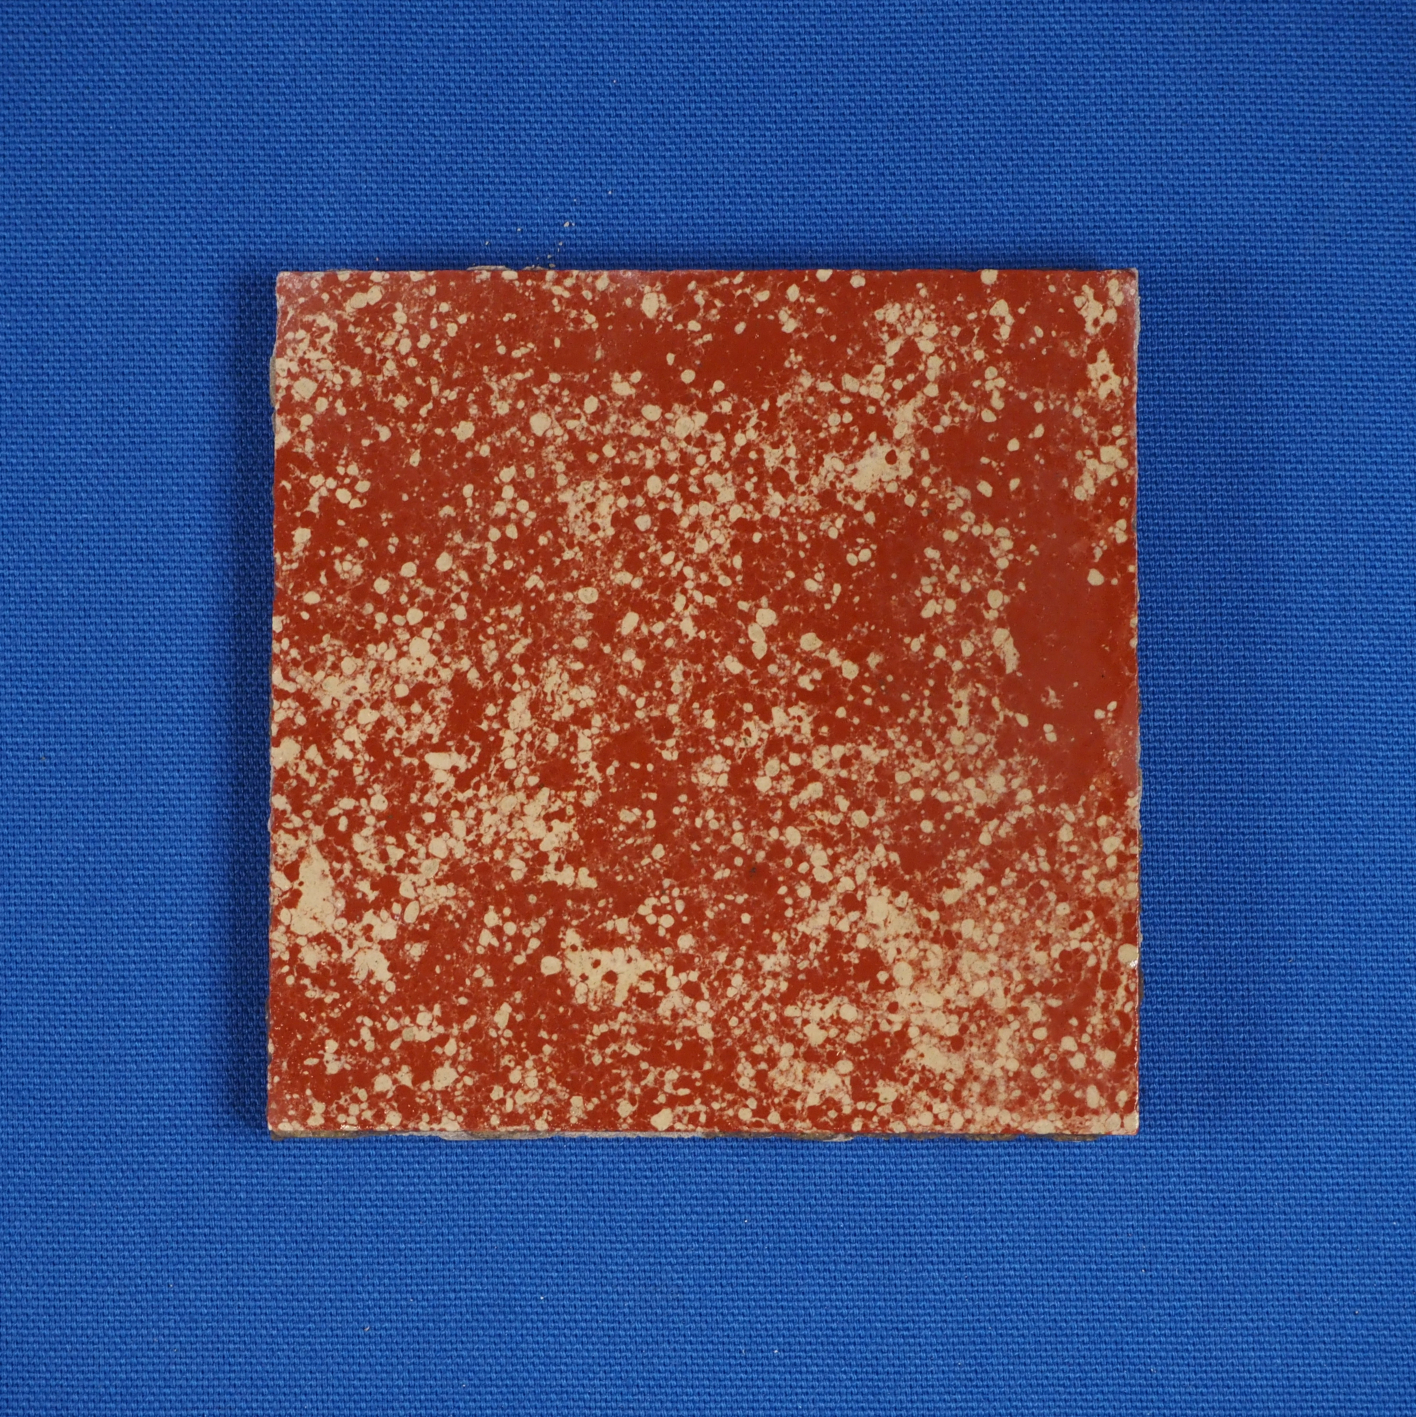 Ceramic tiles 'Antennae' by Impermo (10 x 10 cm)